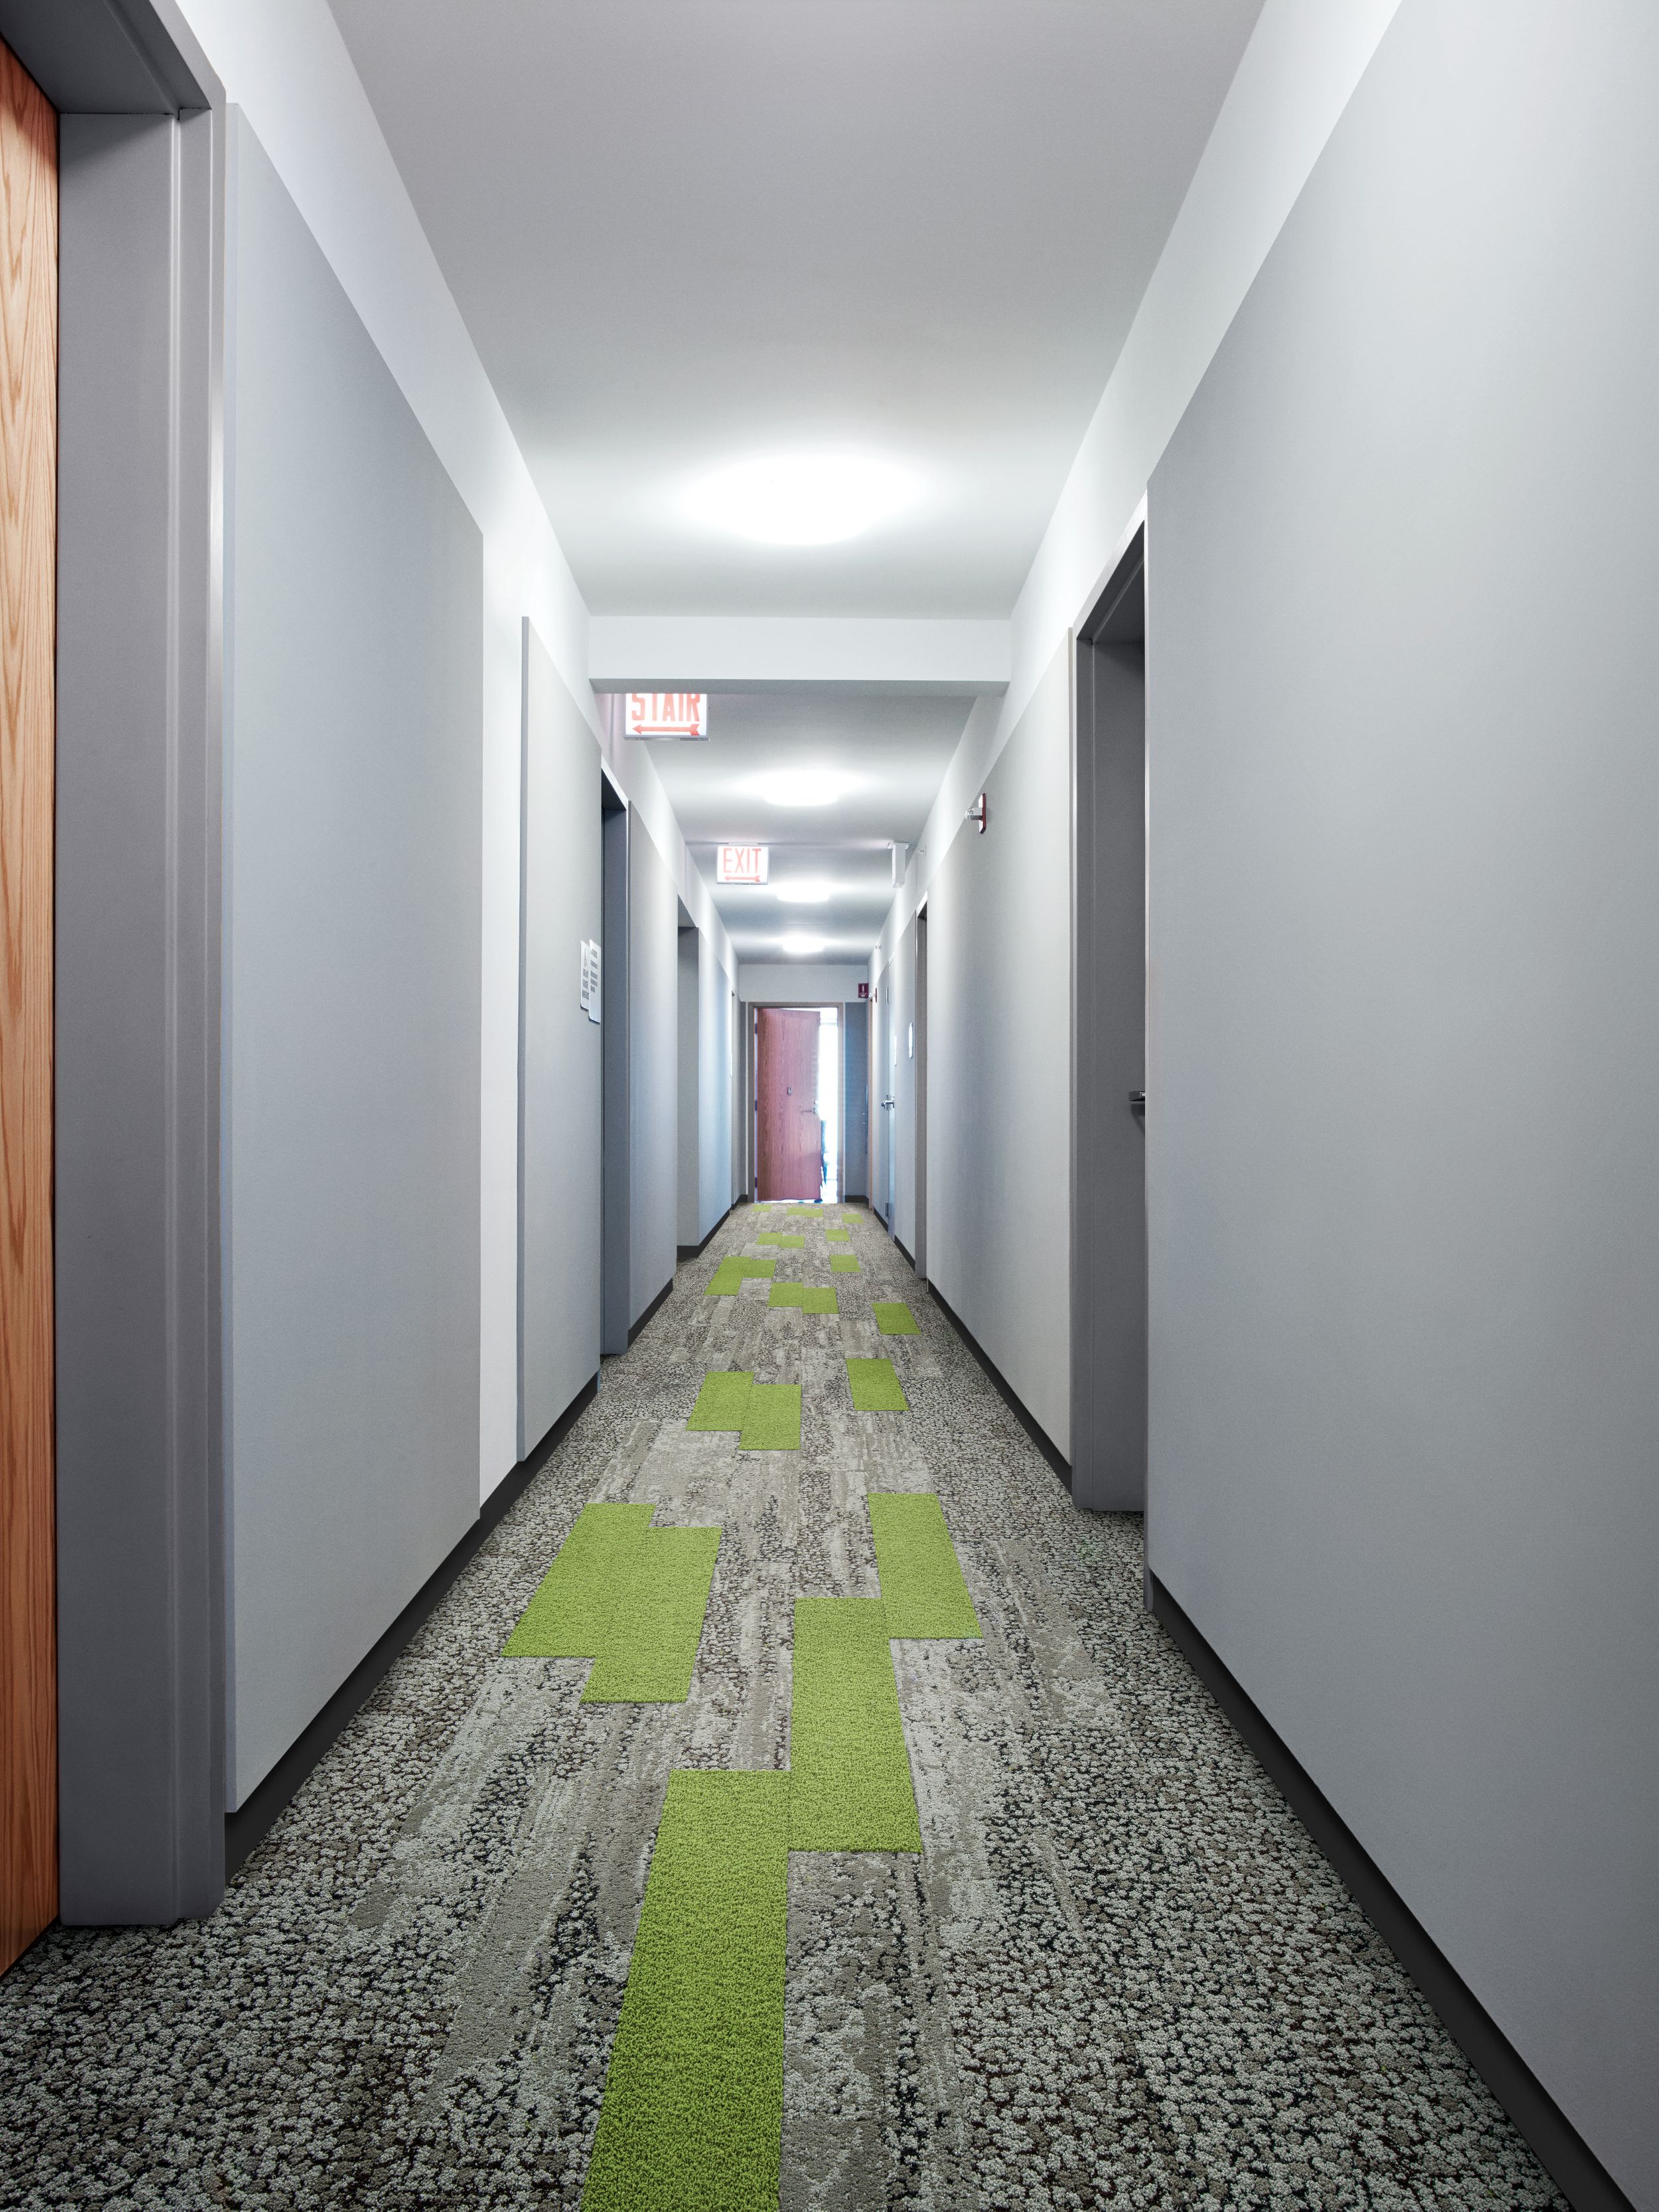 Interface HN830 and HN850 plank carpet tiles in long corridor with mutliple doors and wood door at end imagen número 3